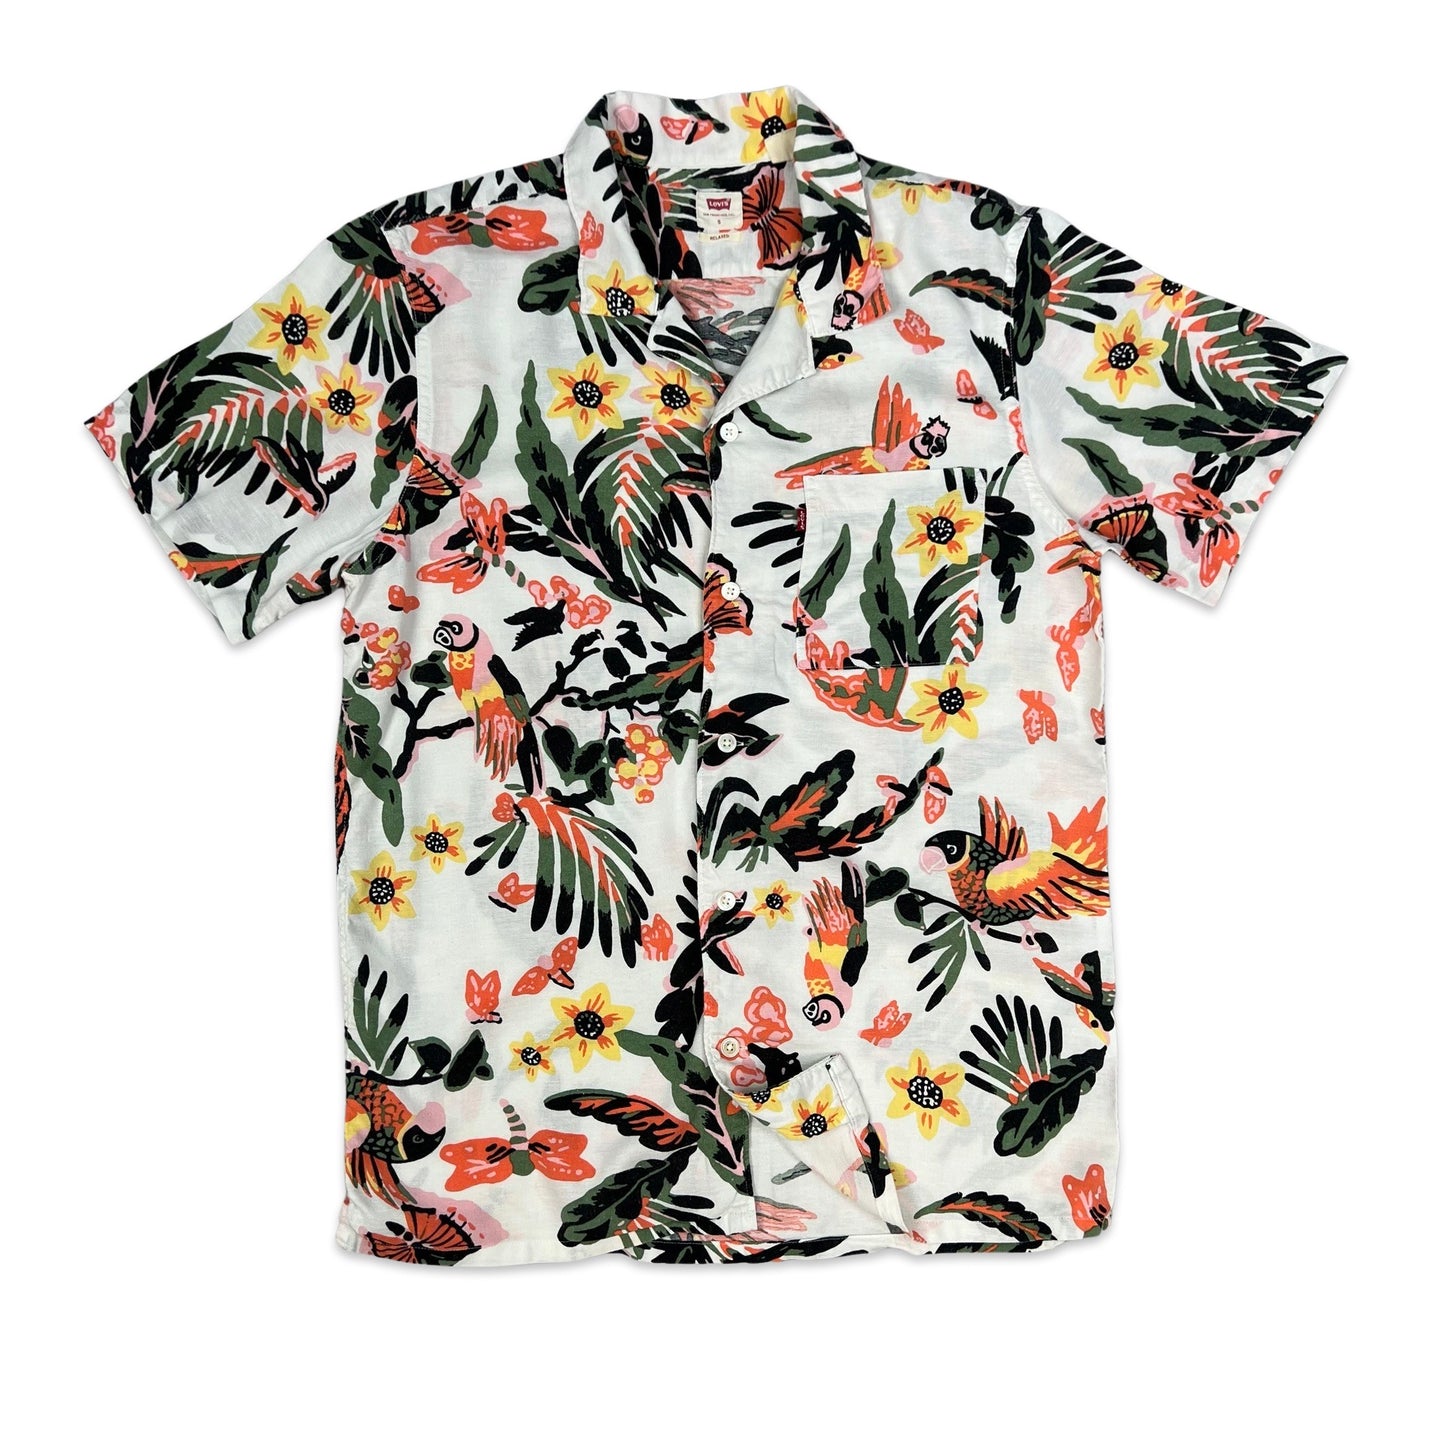 Levi's Botanical Print Hawaiian Shirt S M